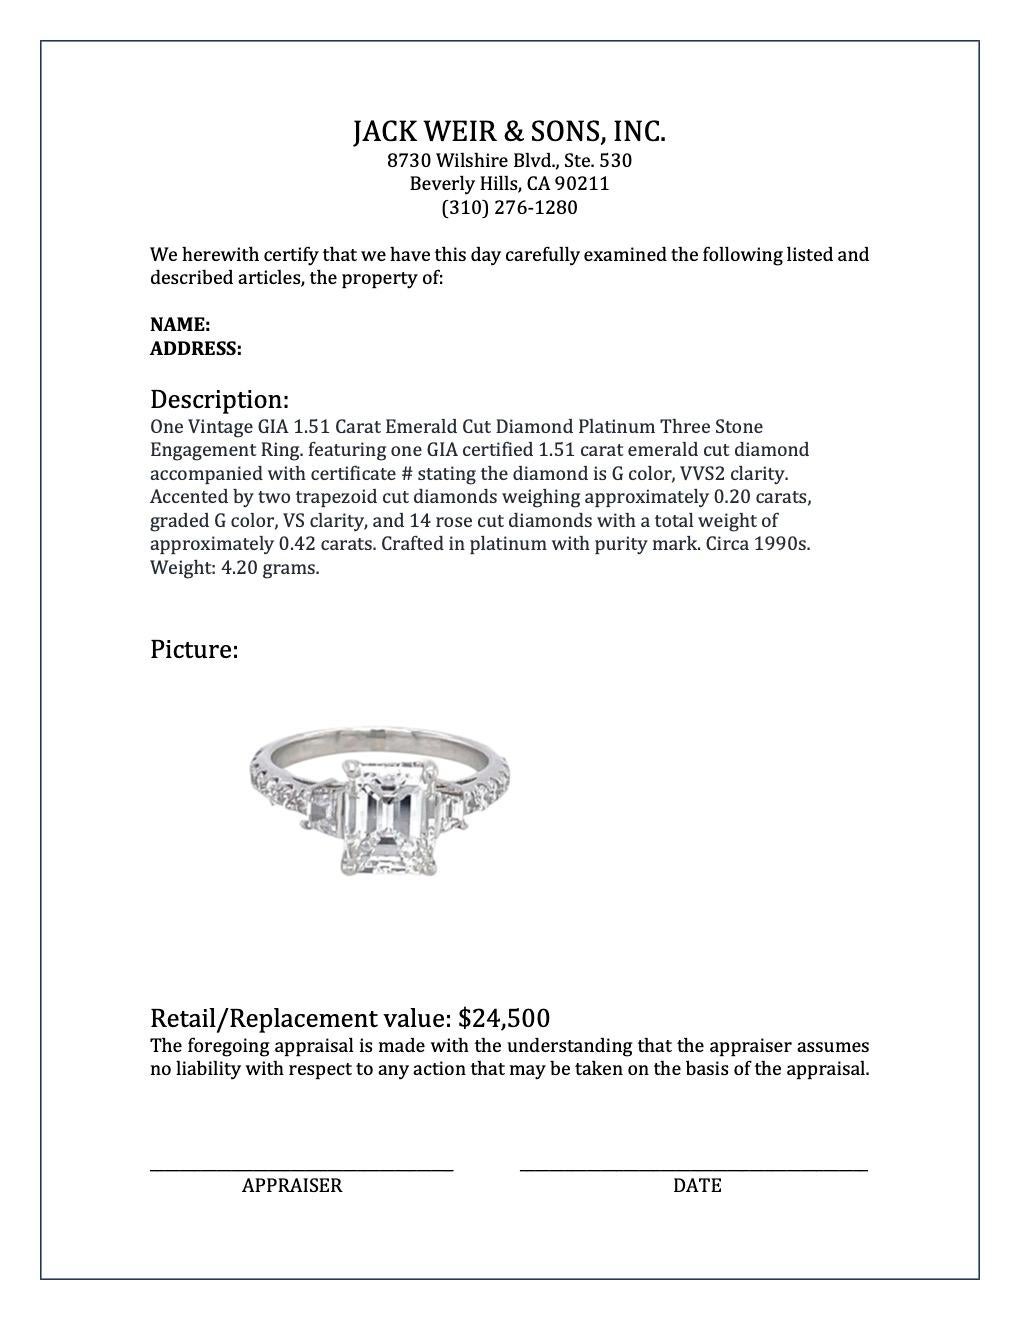 Vintage GIA 1.51 Carat Emerald Cut Diamond Platinum Three Stone Engagement Ring 2